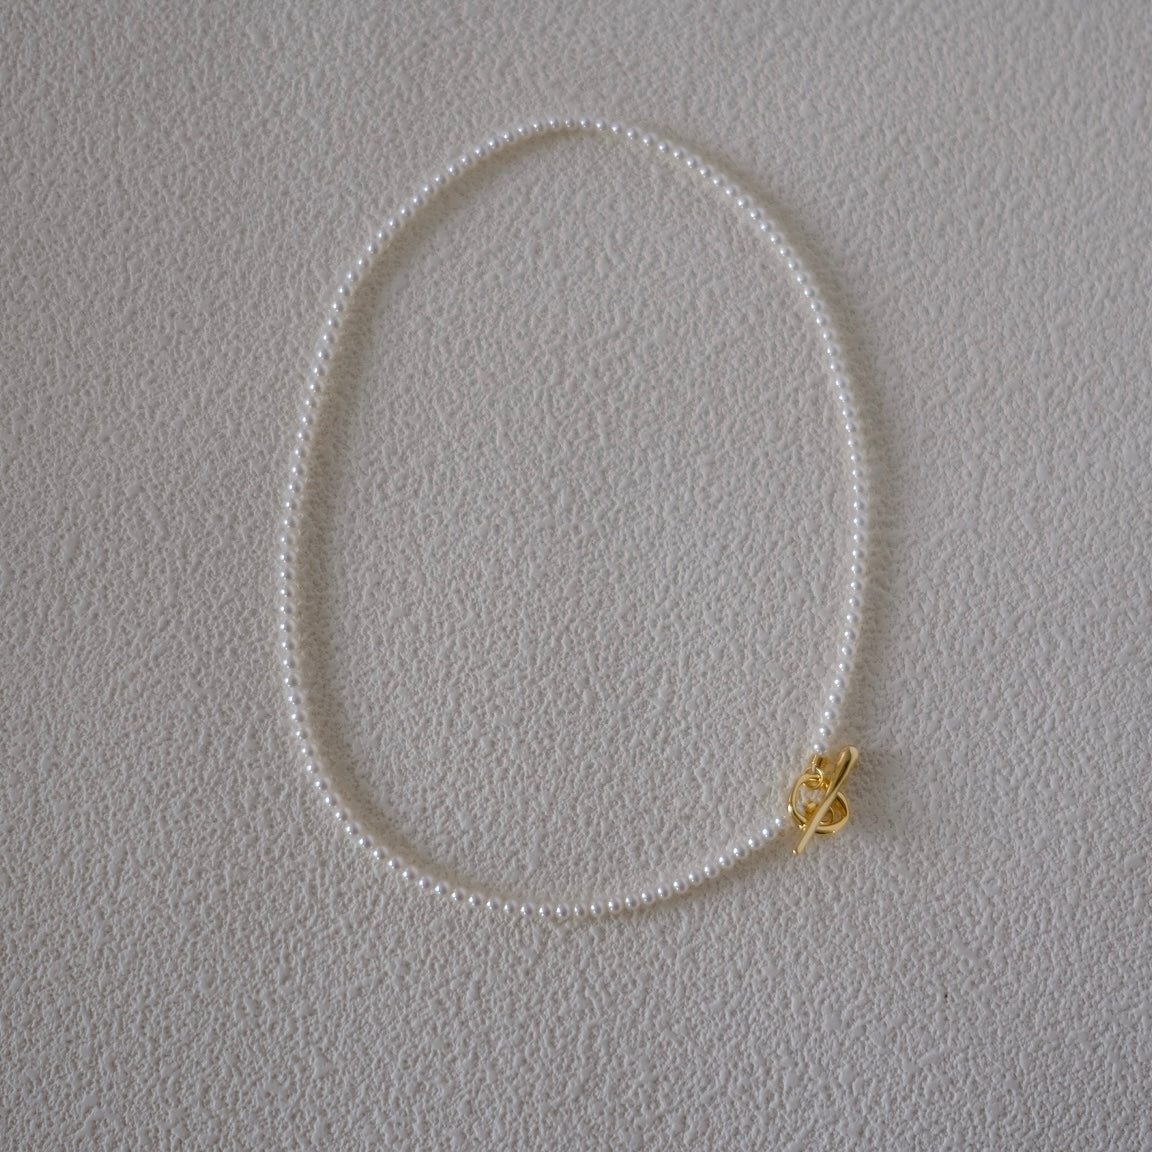 White Freshadama Freshwater Pearl Necklace, 3.5-4mm, 18 Inch